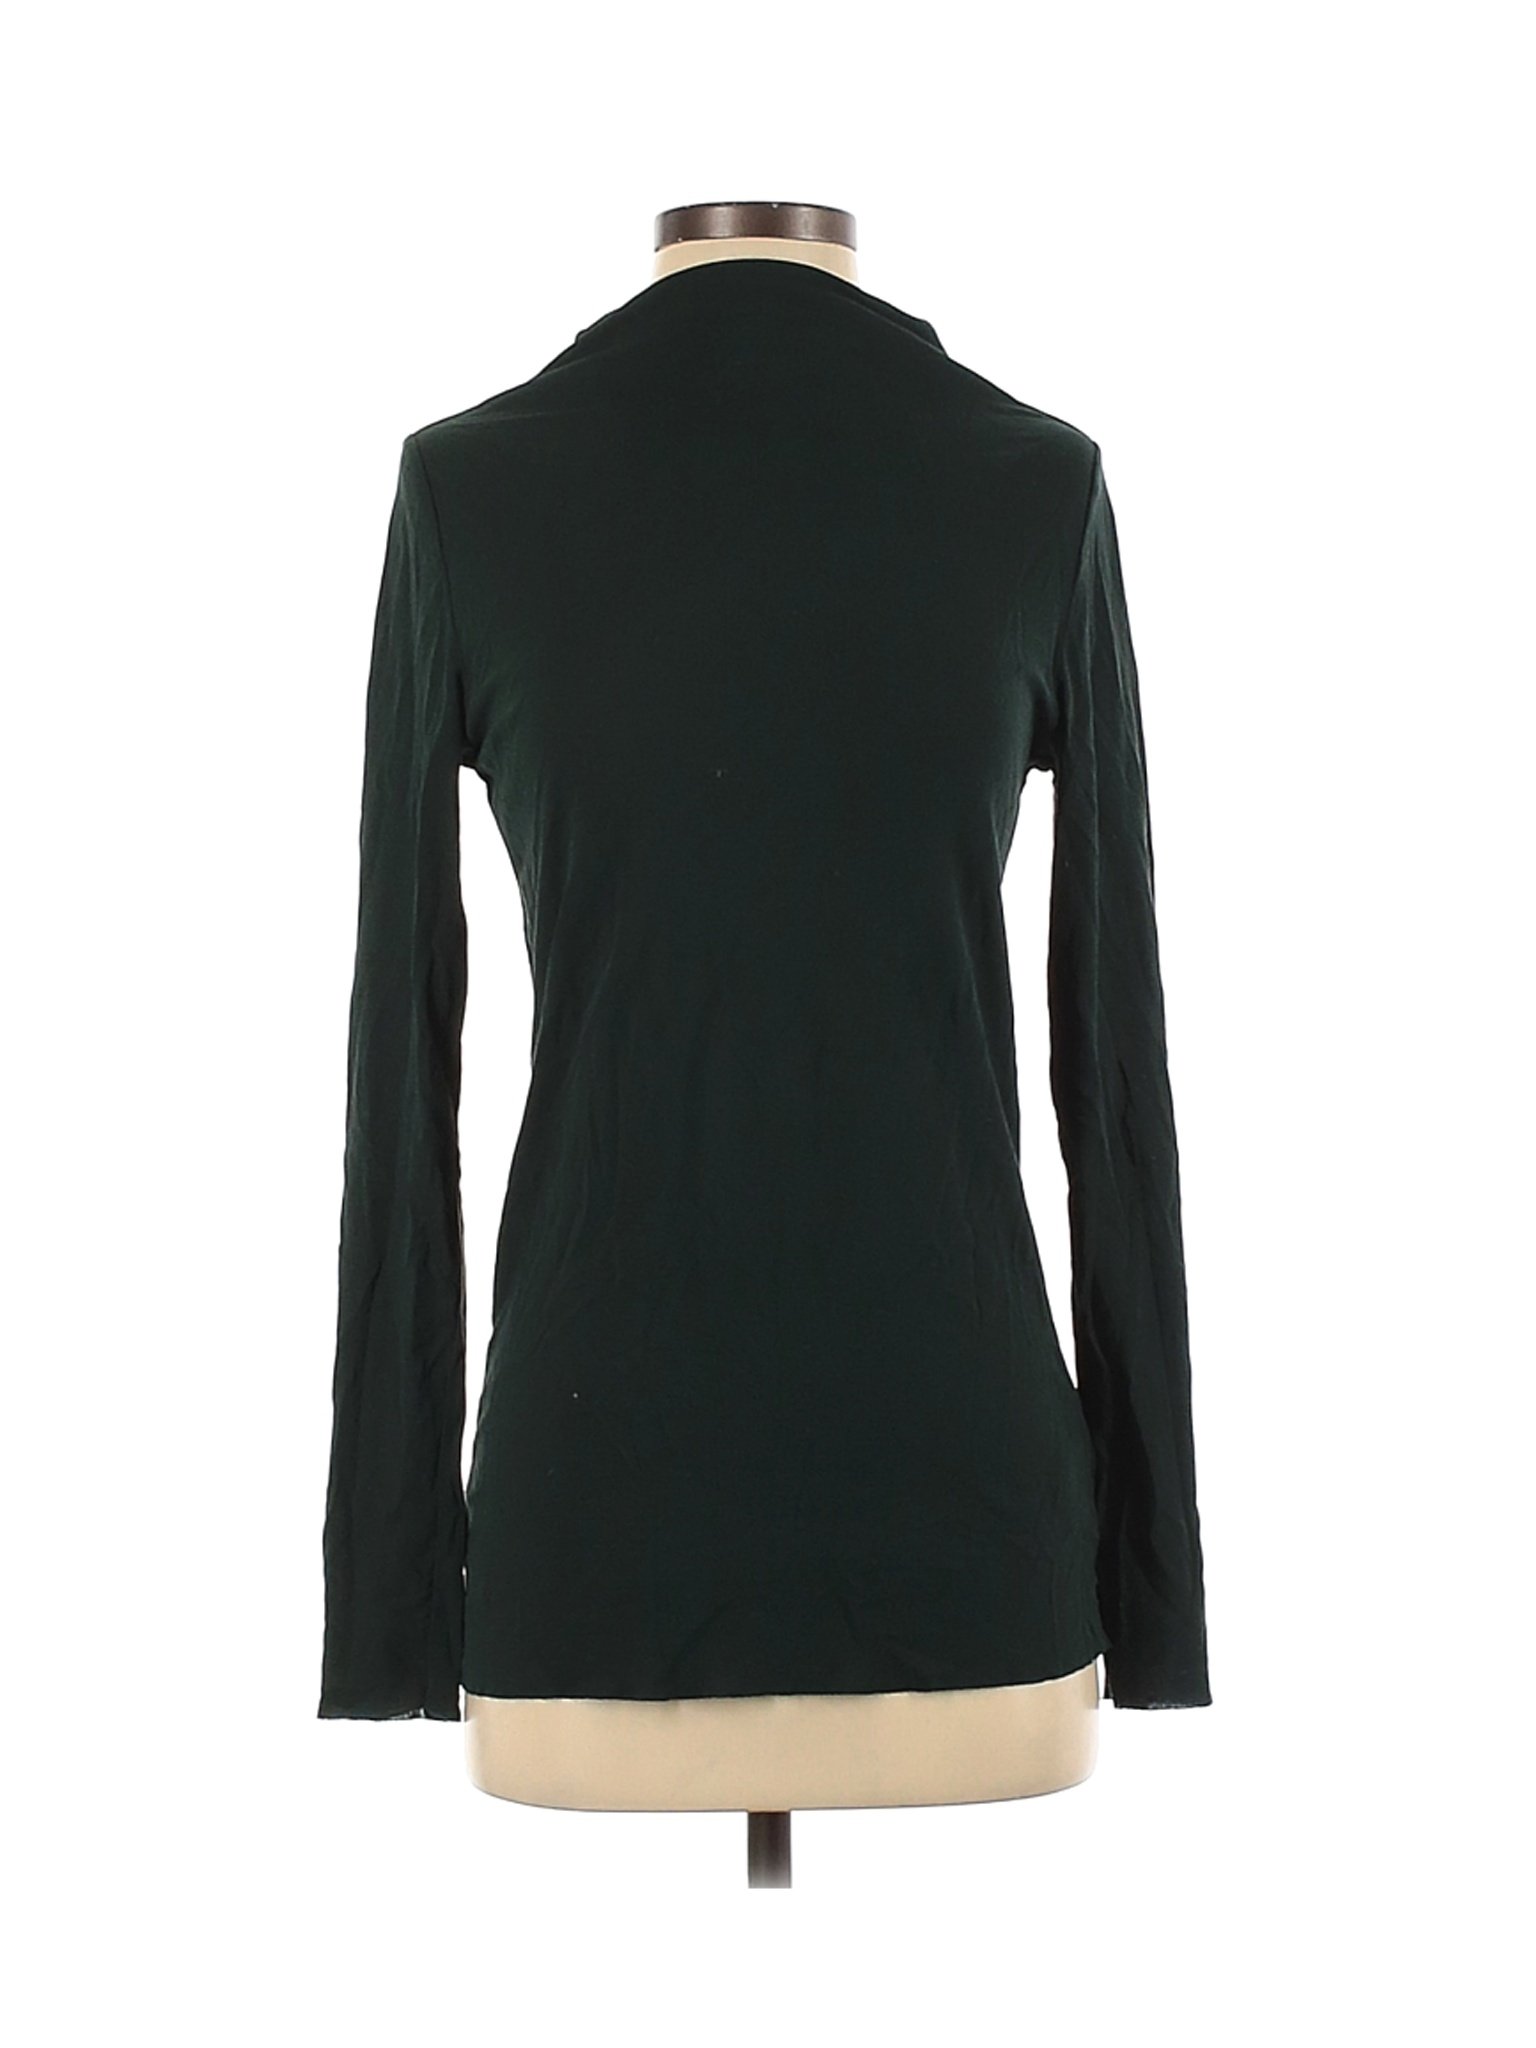 Cos Women Green Long Sleeve Top M | eBay